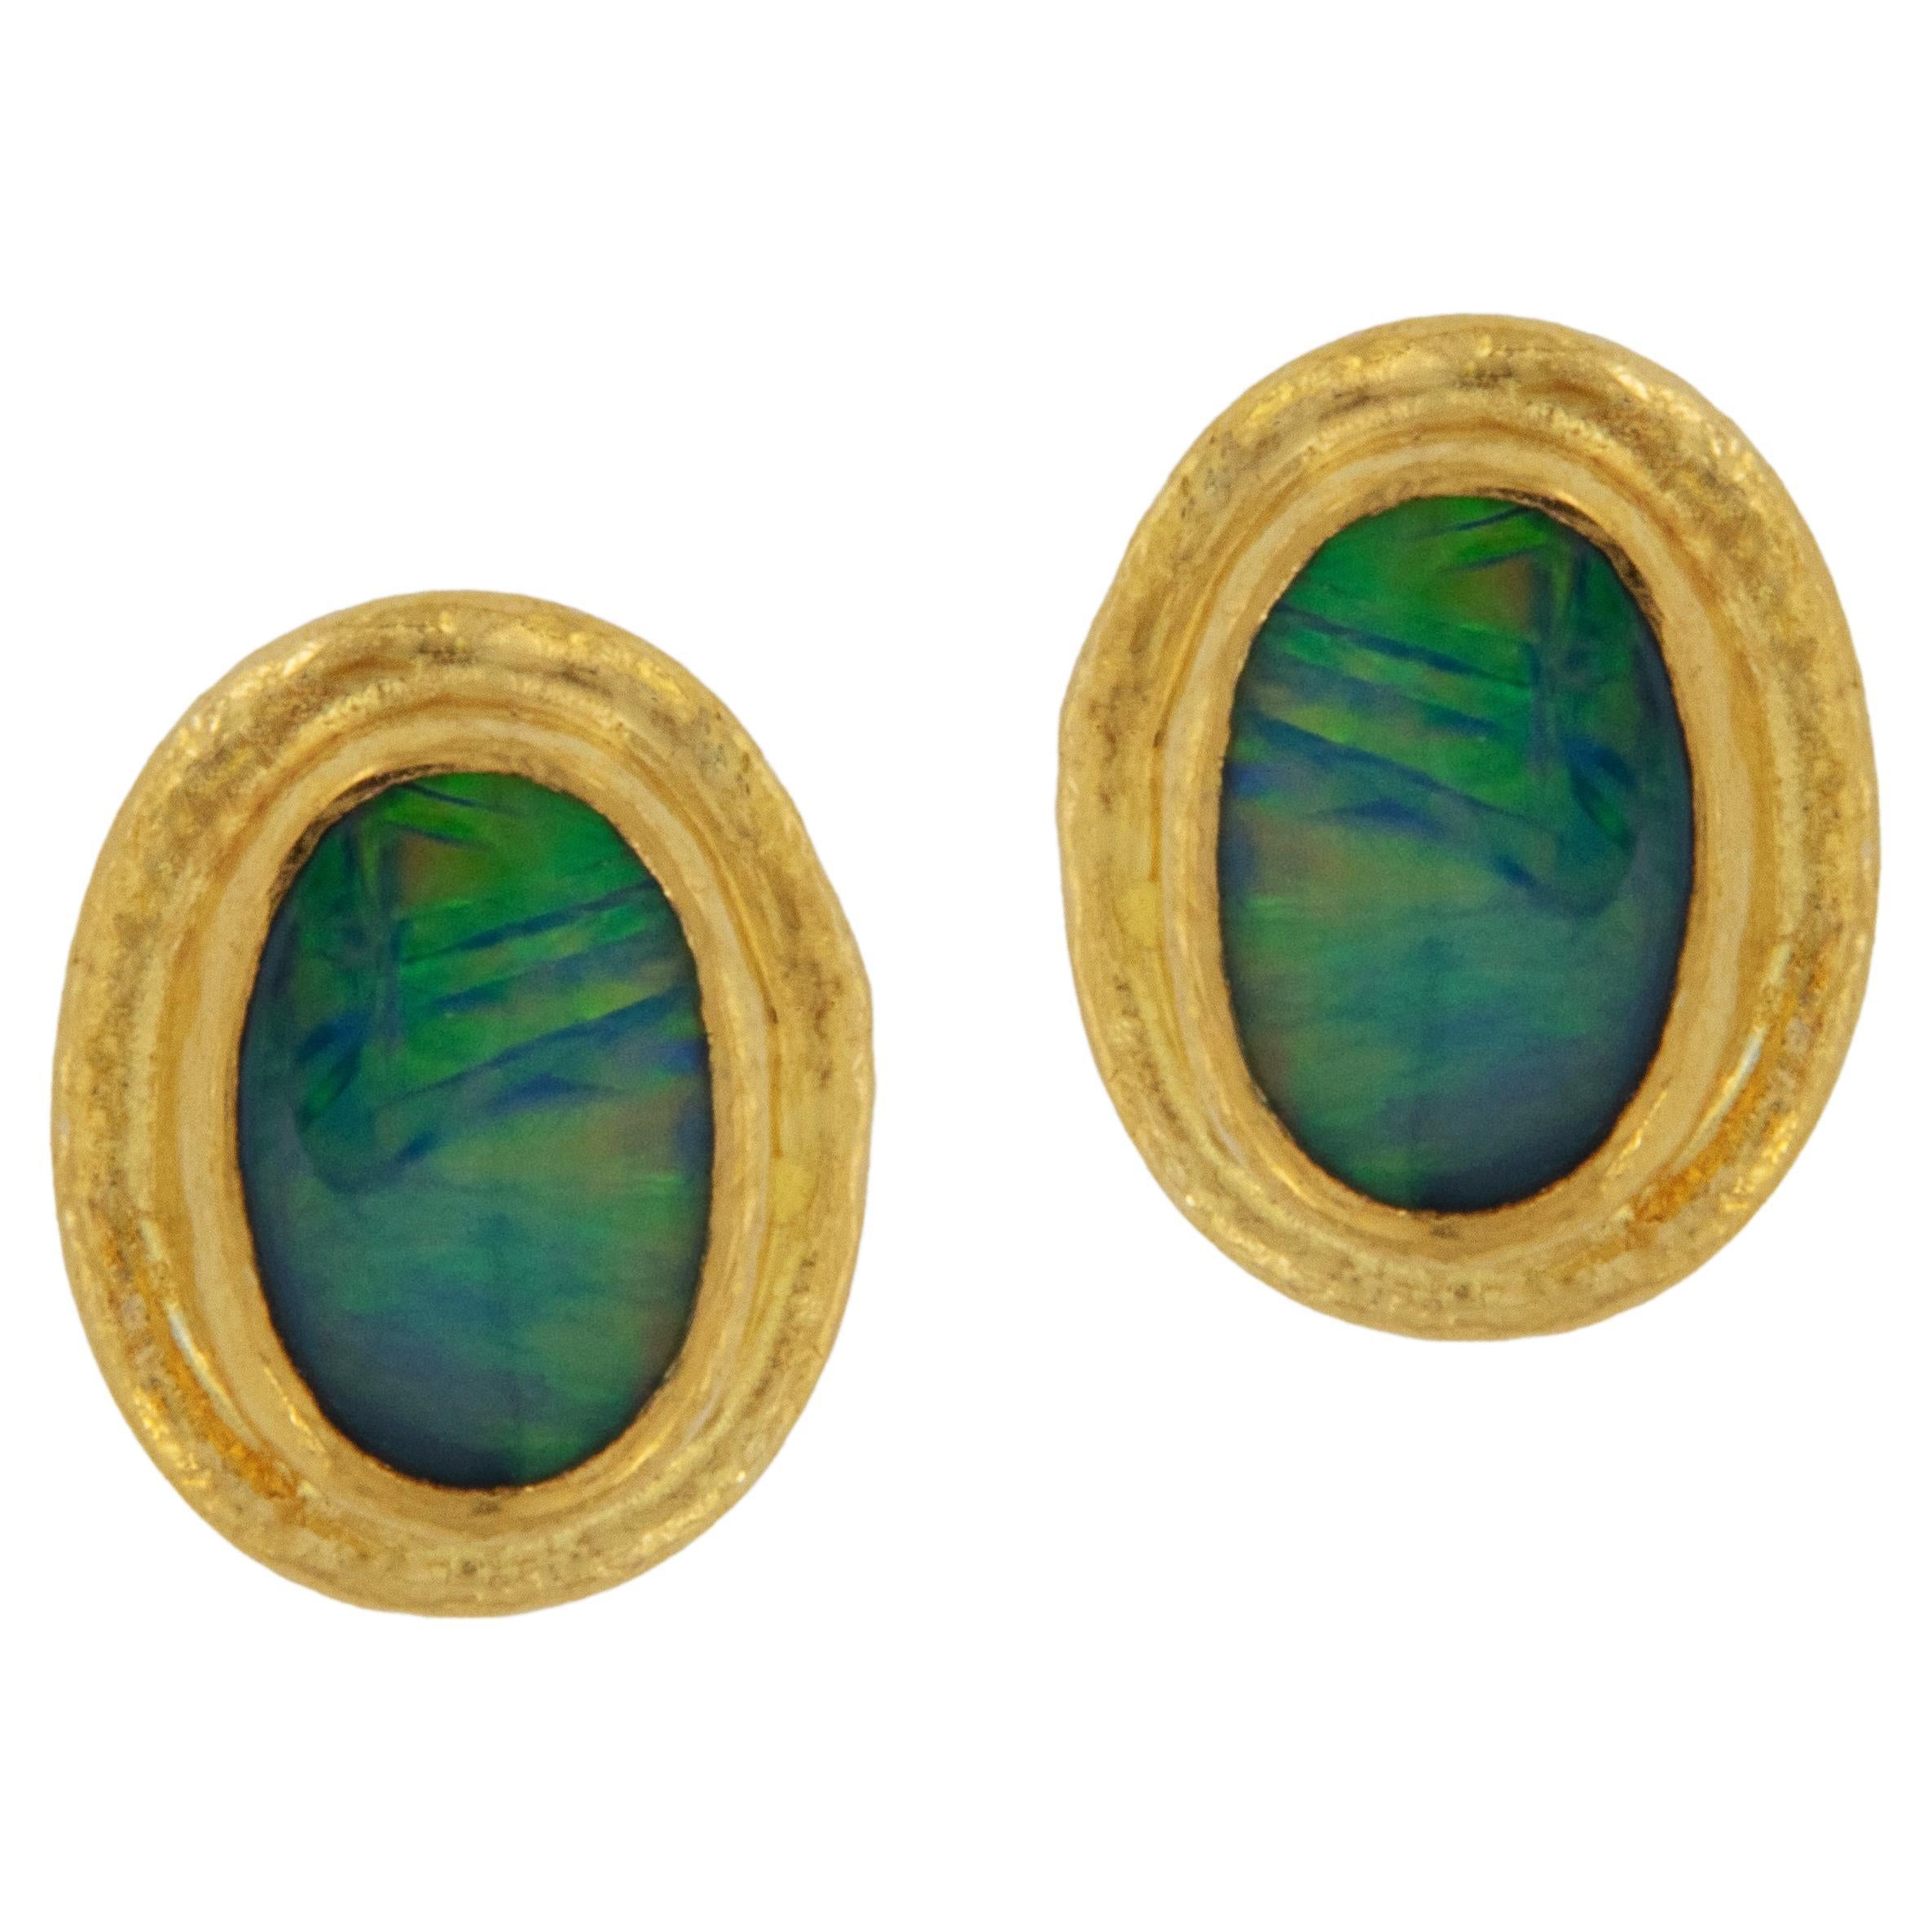 Handmade Pure 24 Karat Yellow Gold Opal Stud Earrings